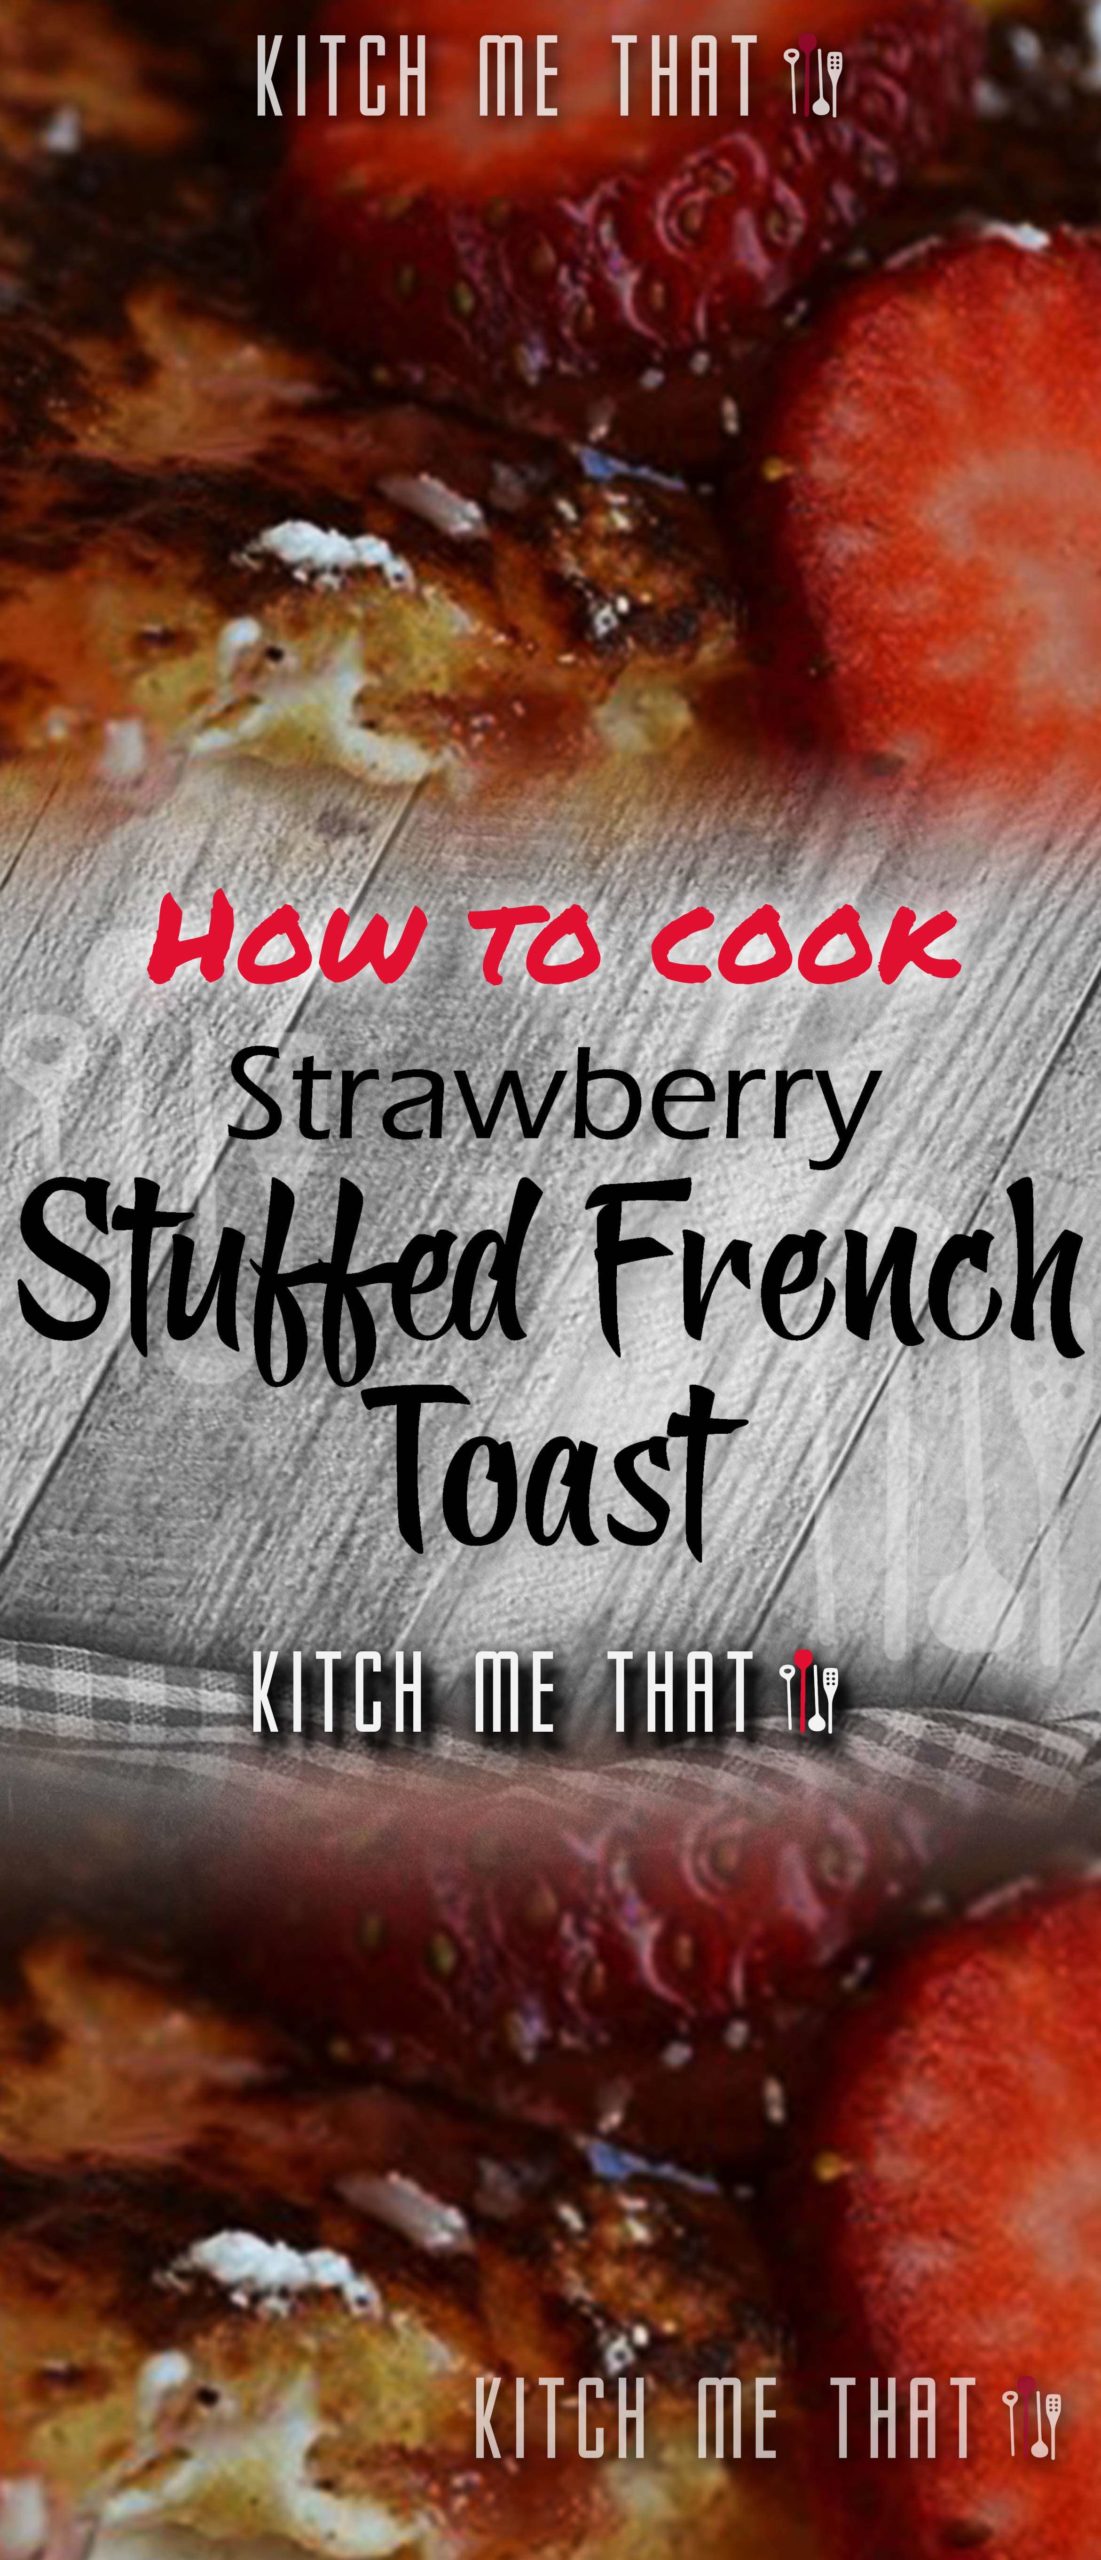 Strawberry Cheesecake-Stuffed French Toast